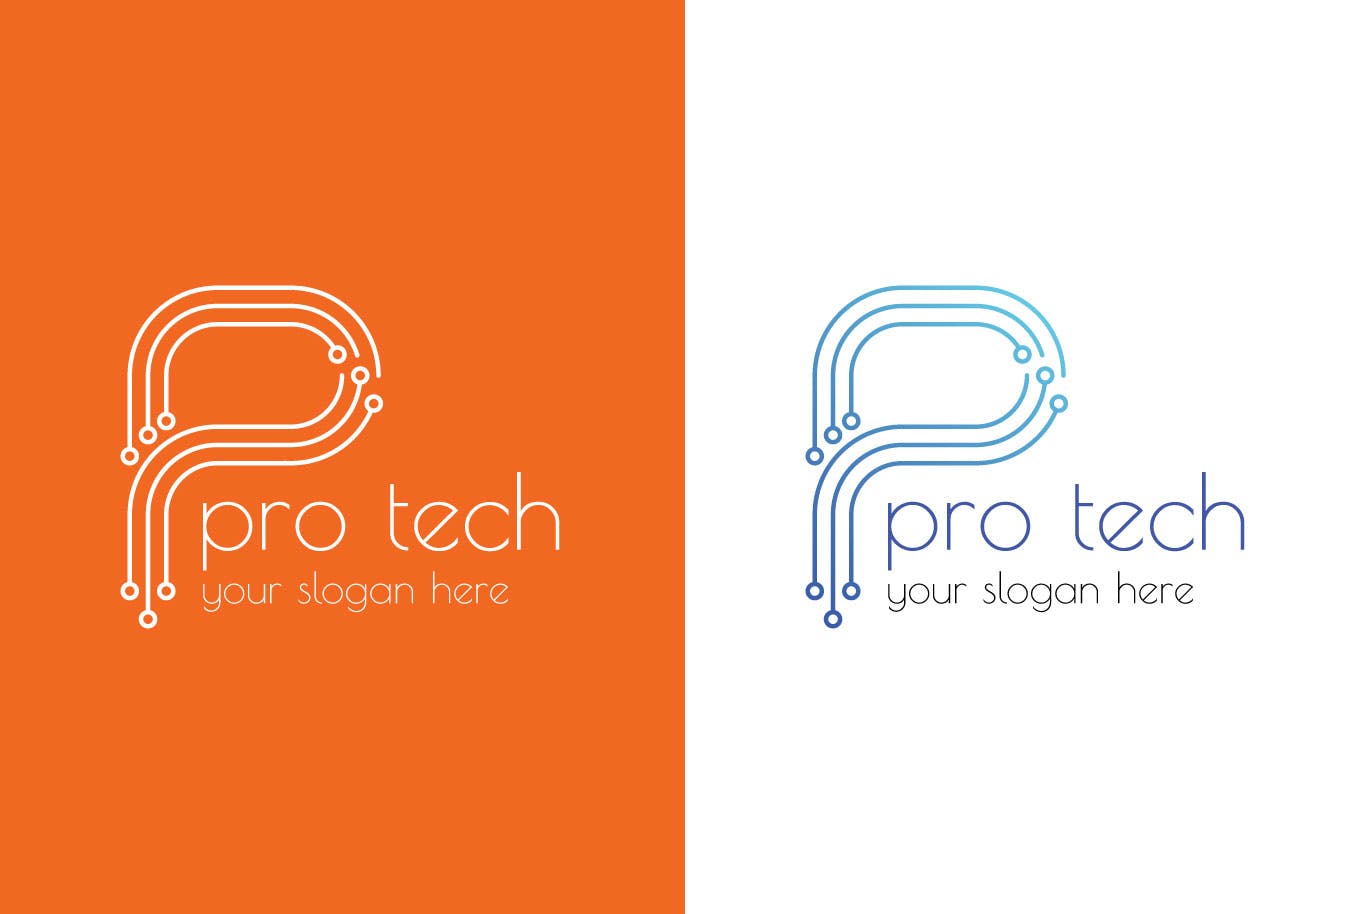 字母P创意图形企业Logo设计蚂蚁素材精选模板 Letter Based Business Logo Template插图(1)